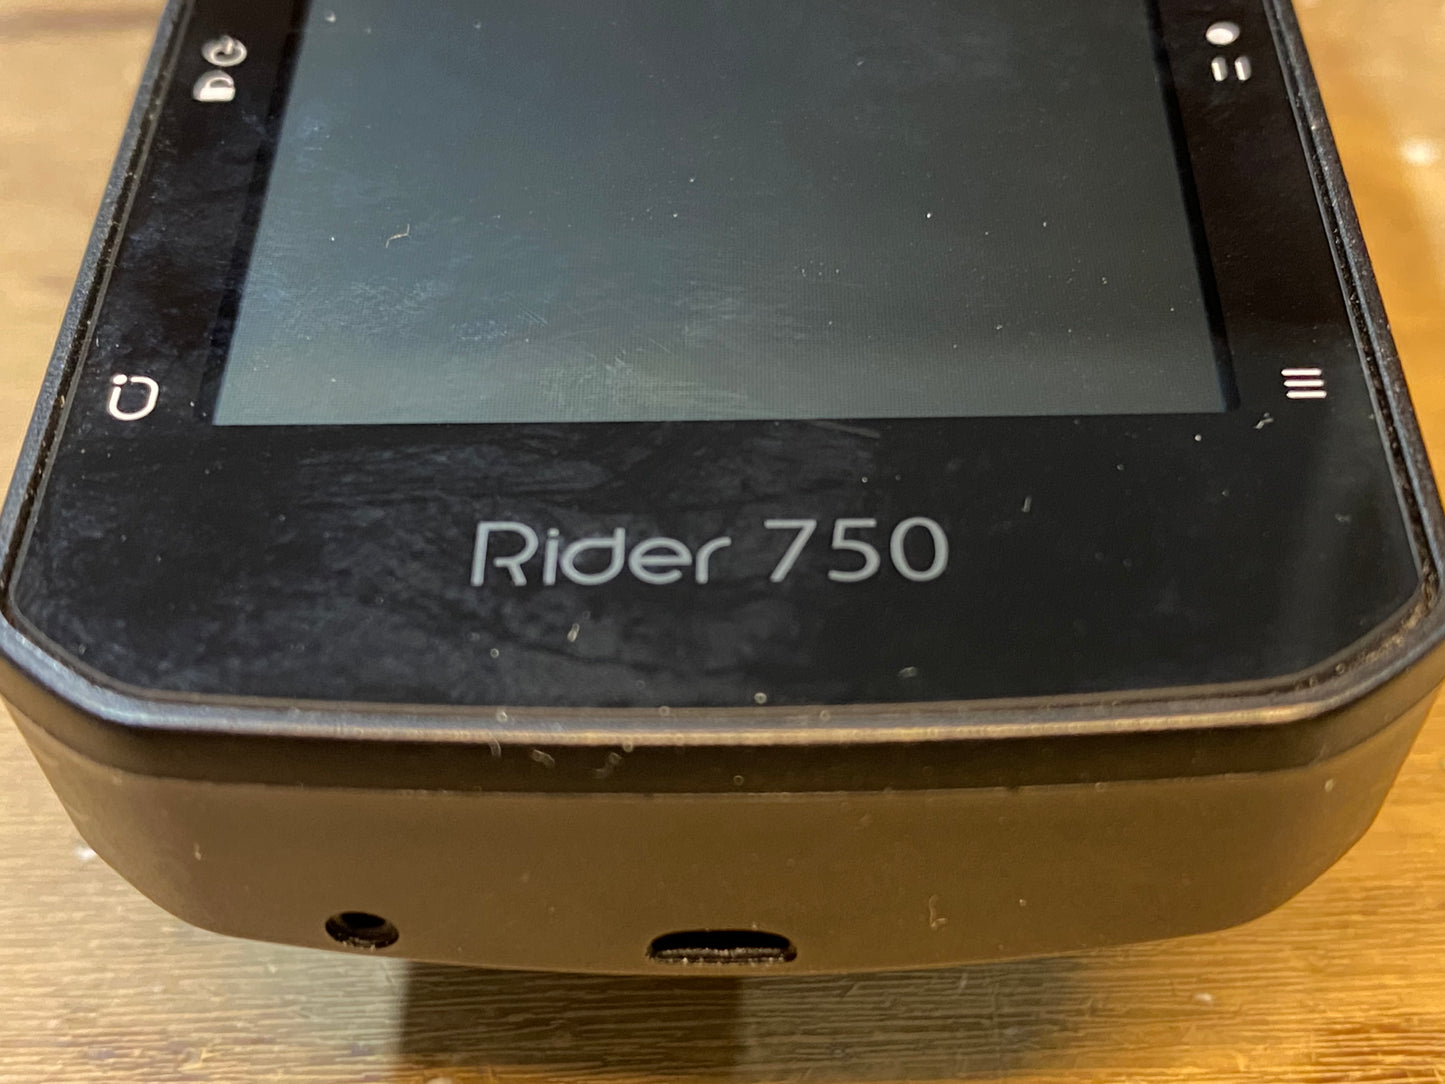 GY598 ブライトン bryton ライダー Rider 750 サイクルコンピューター ※初期化不可 GPS接続不可のためジャンク